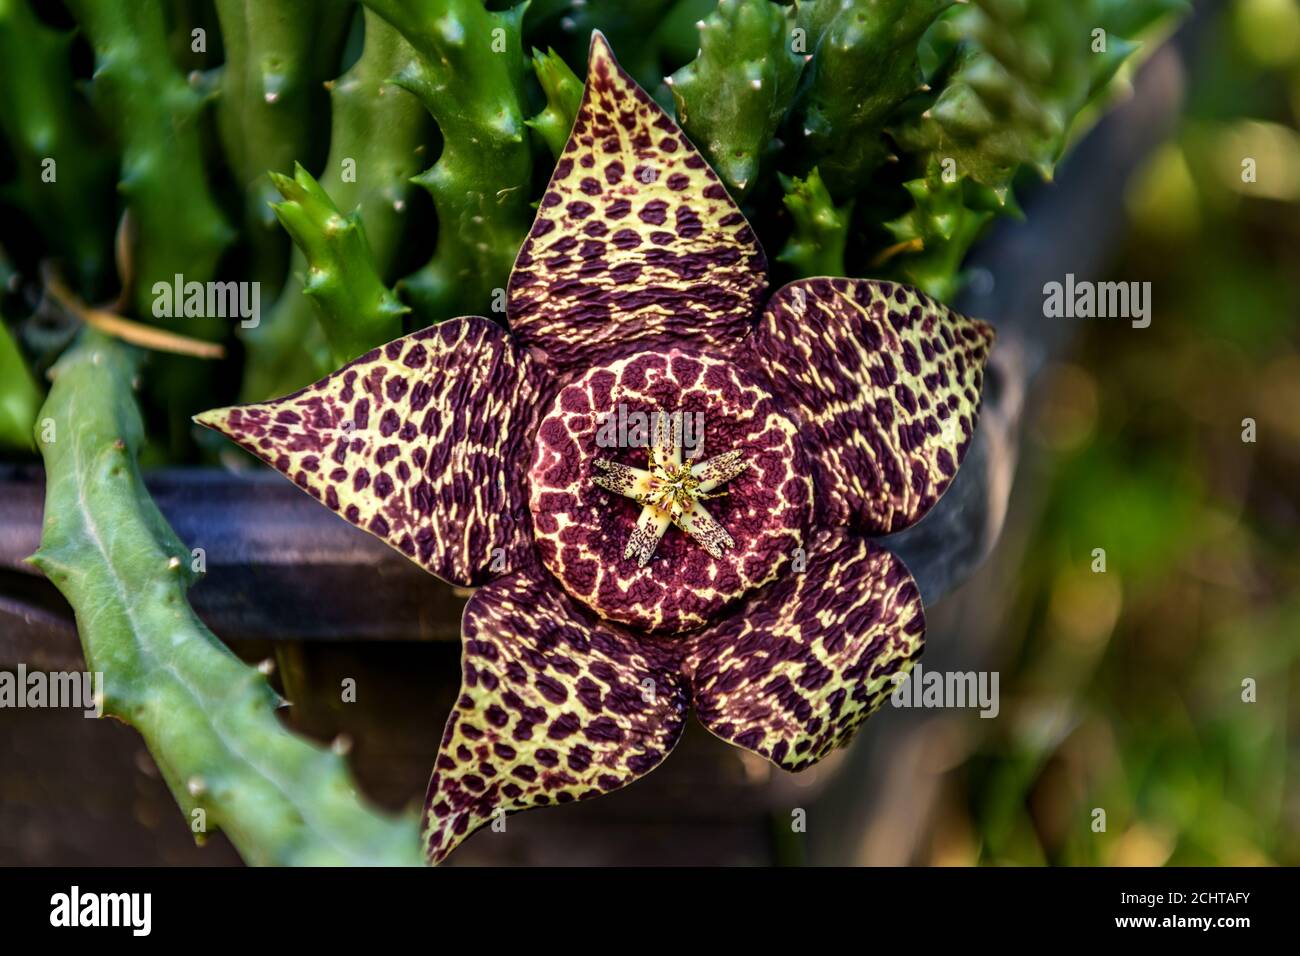 Fresh blooming flower of a Stapelia Orbea Variegata, decorative garden plant. Selective focus. Stock Photo